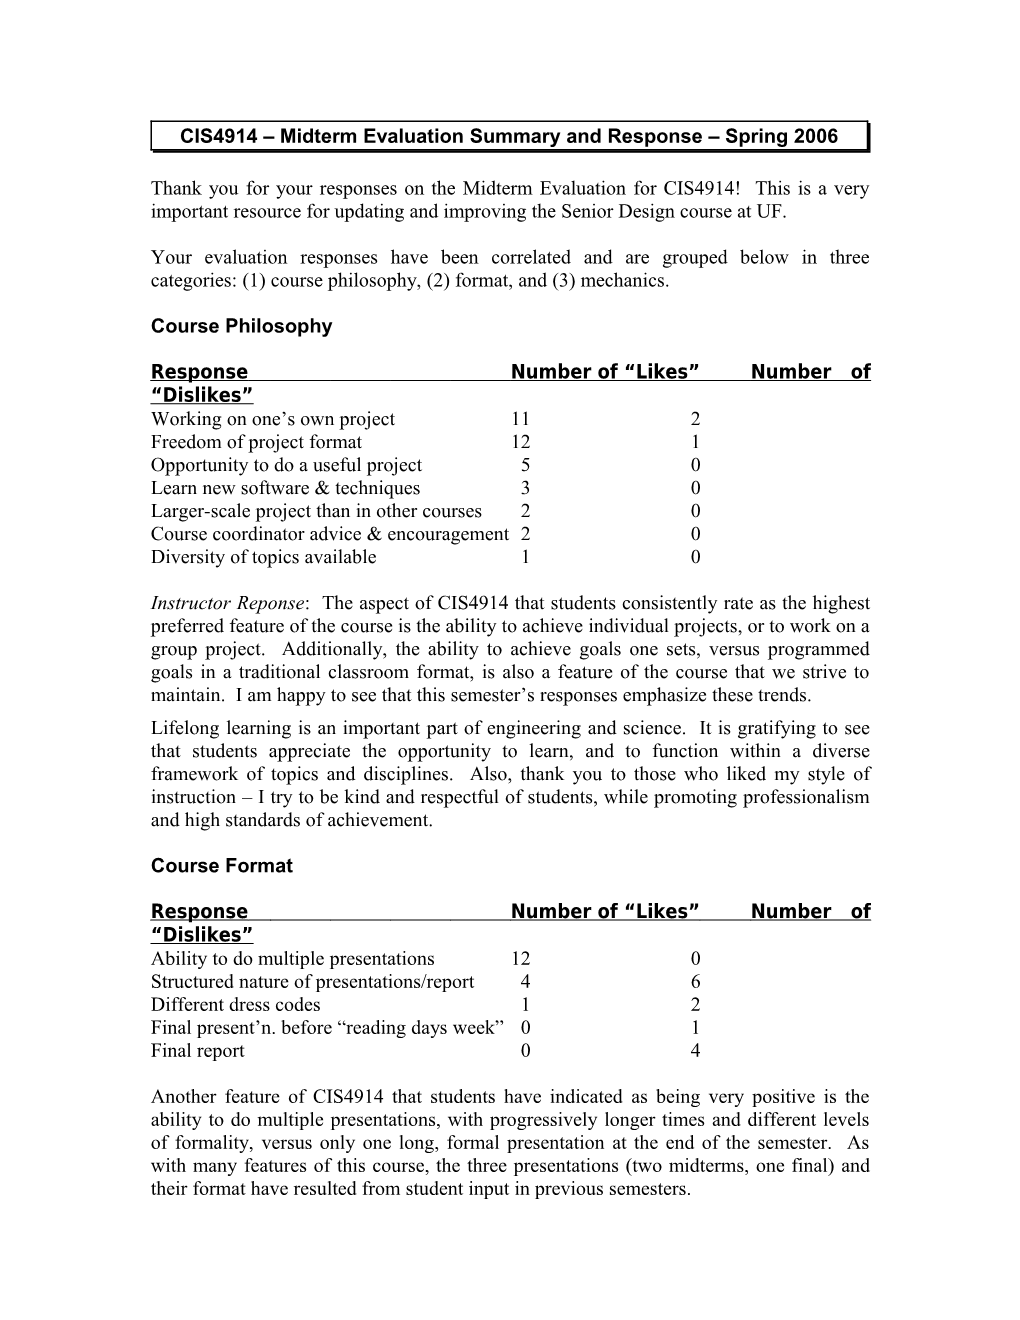 CIS4914 Midterm Evaluation Summary and Response Spring 2006